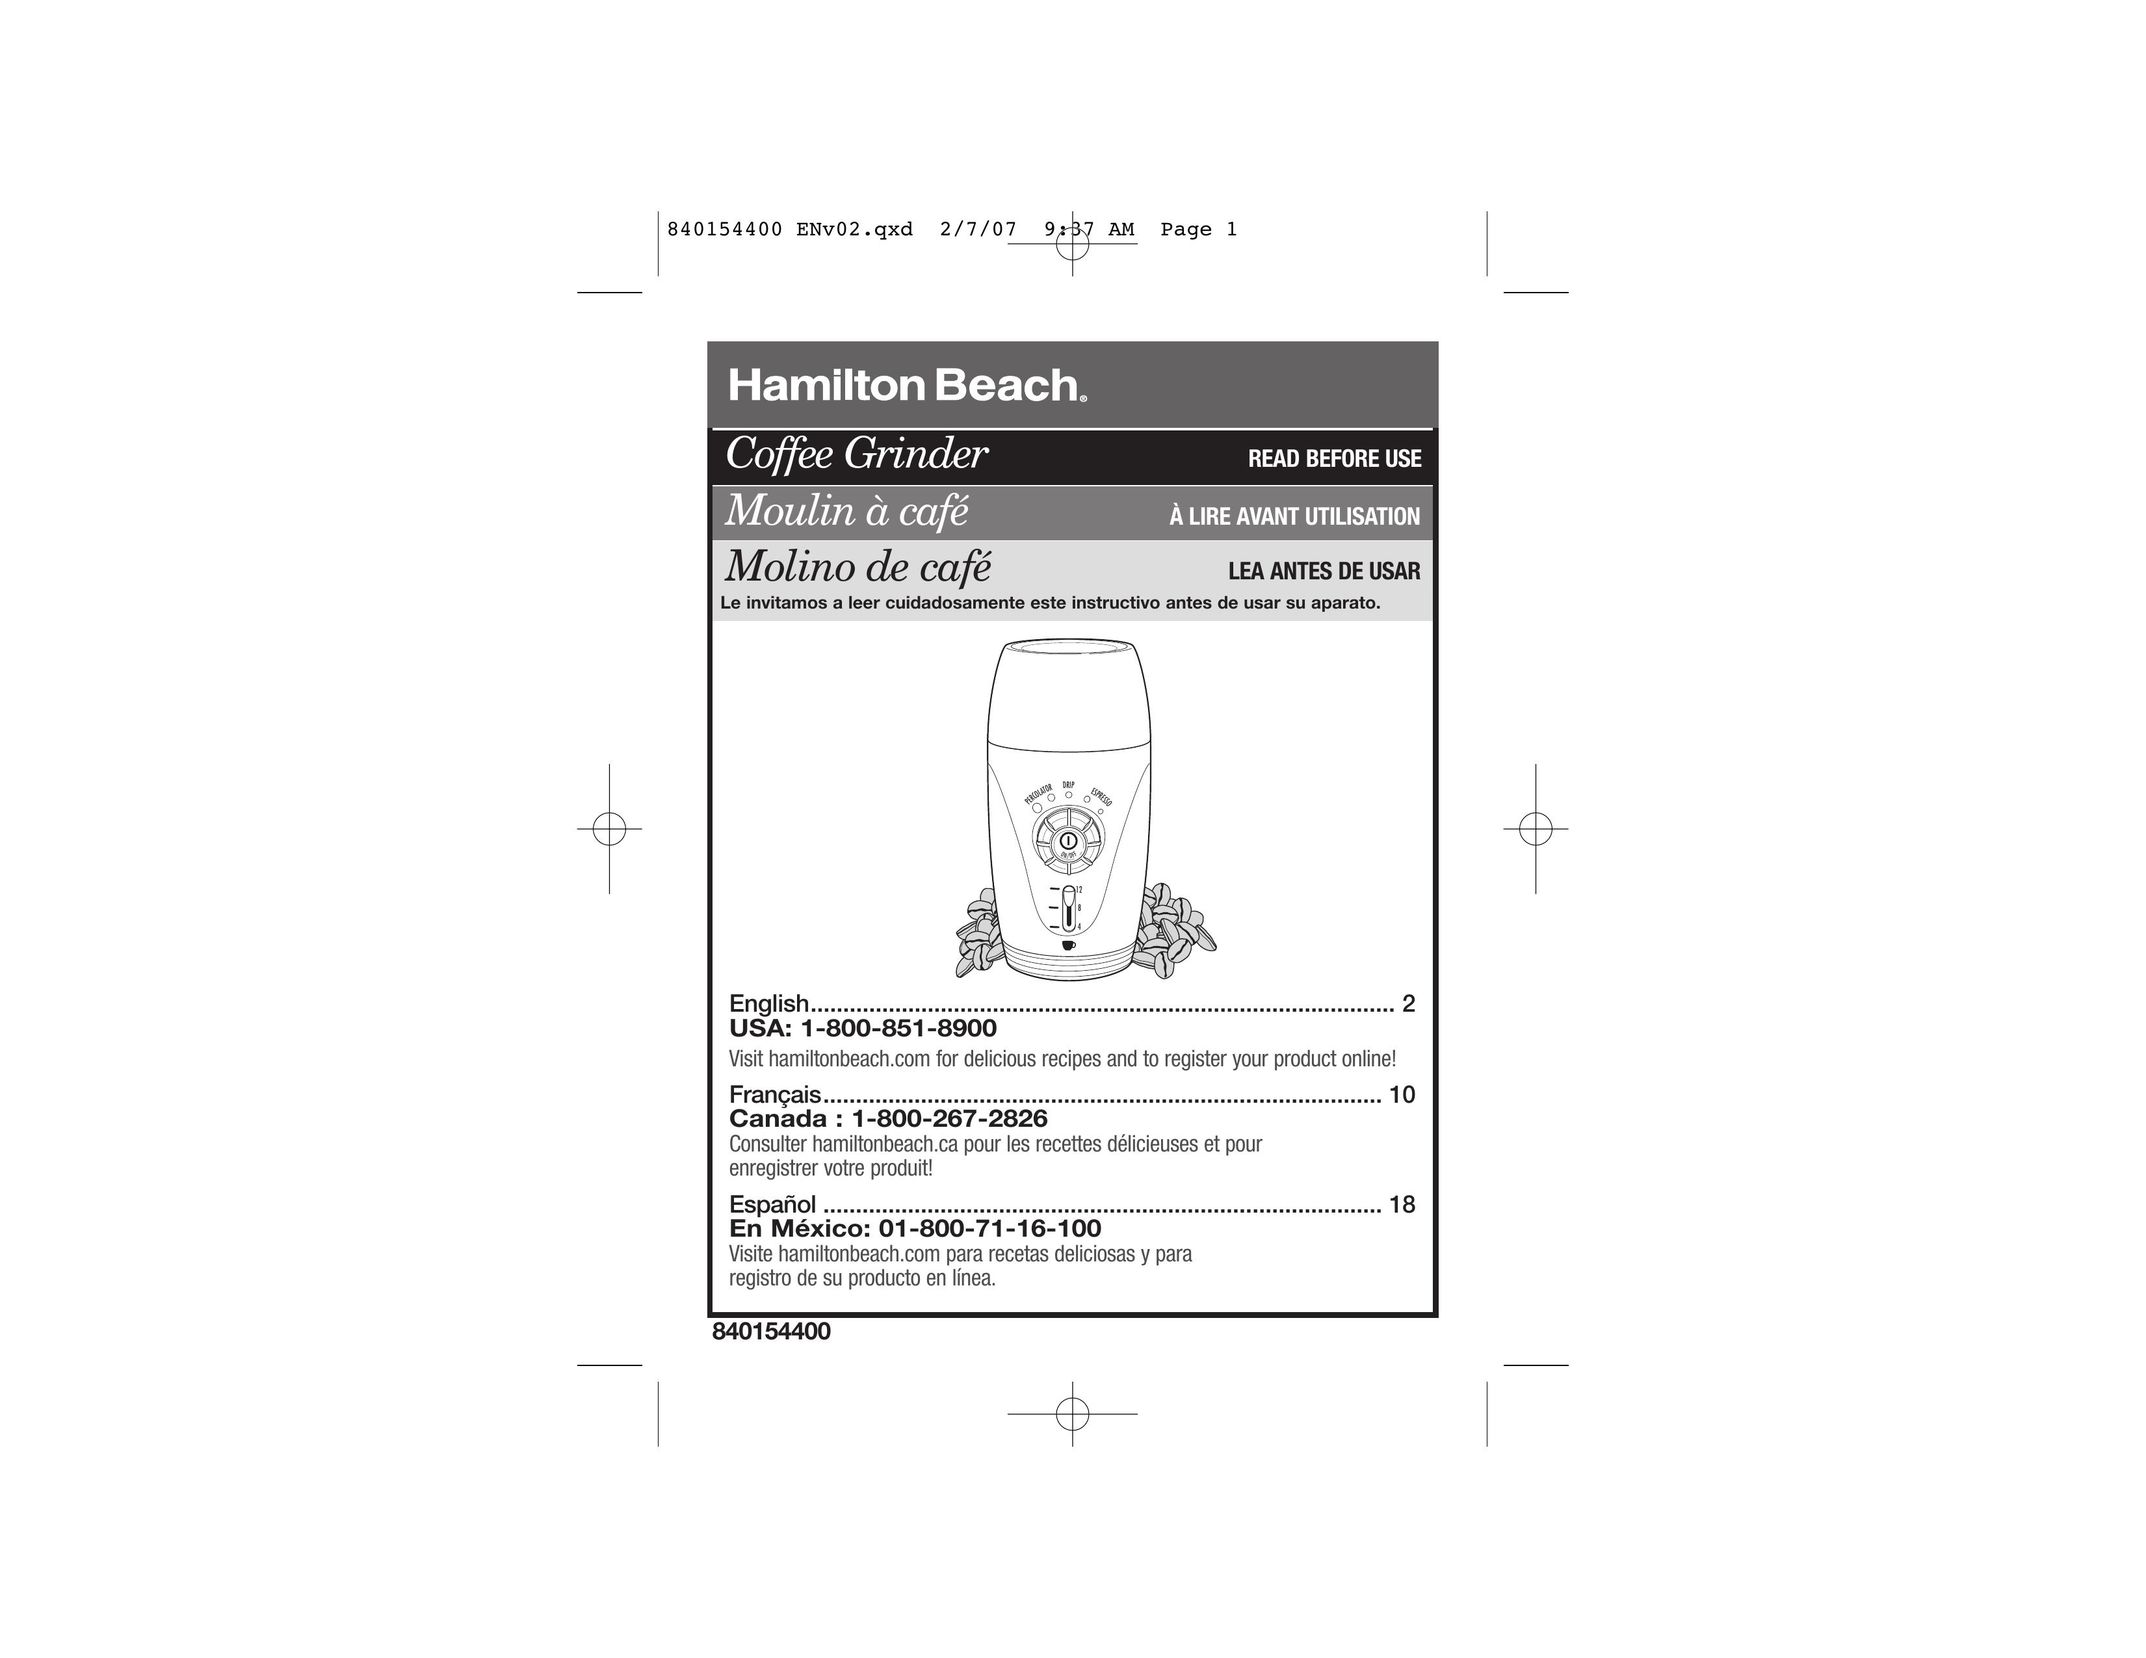 Hamilton Beach 840154400 Coffee Grinder User Manual